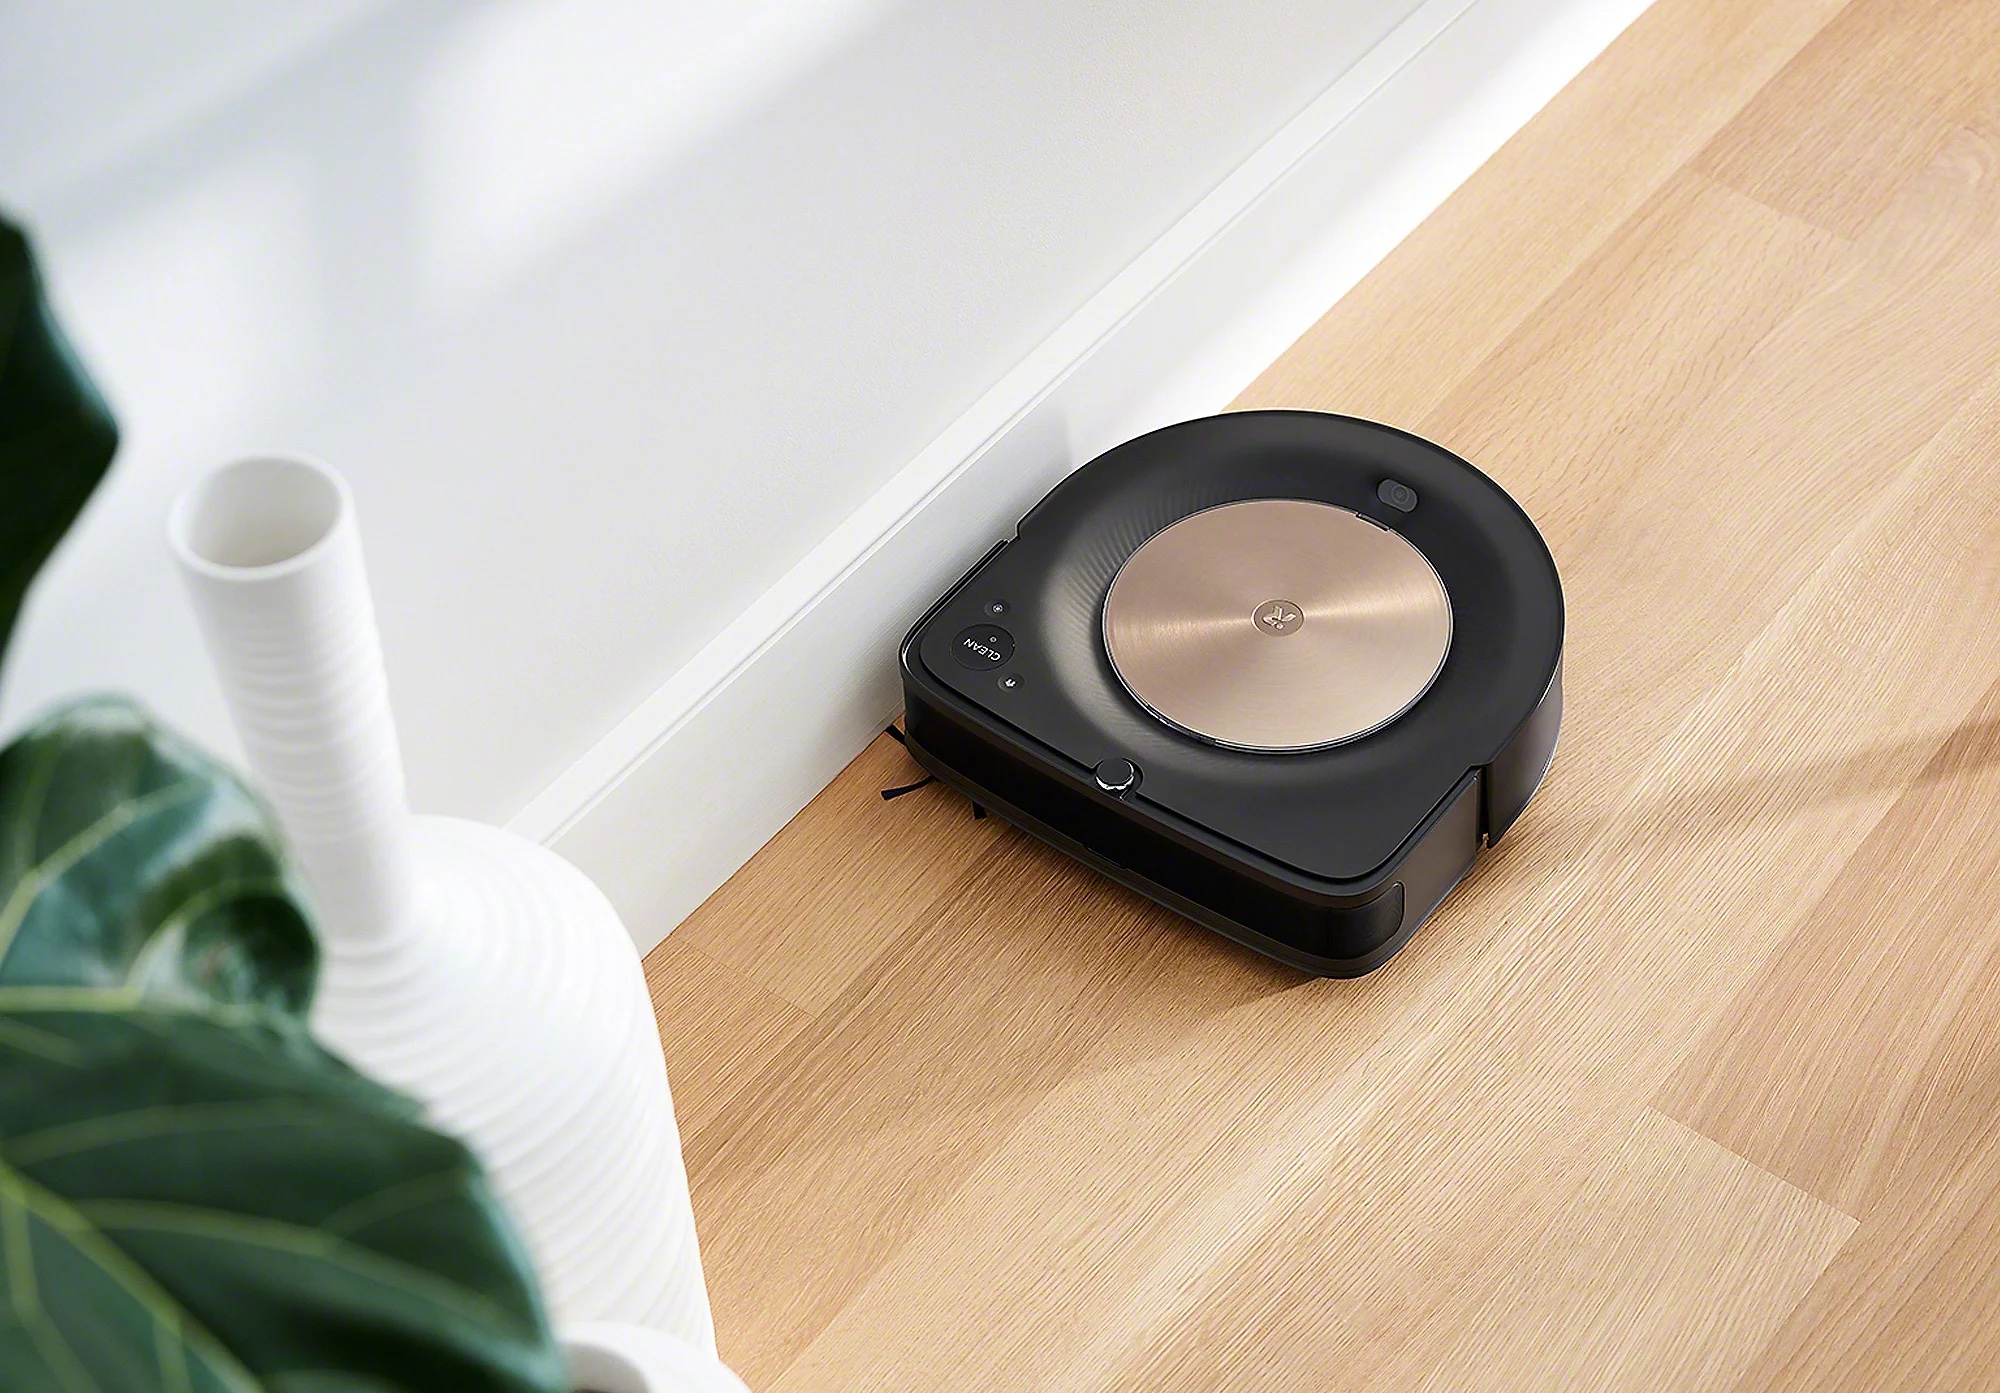 iRobot Roomba s9+ robot vacuum is at its best price yet